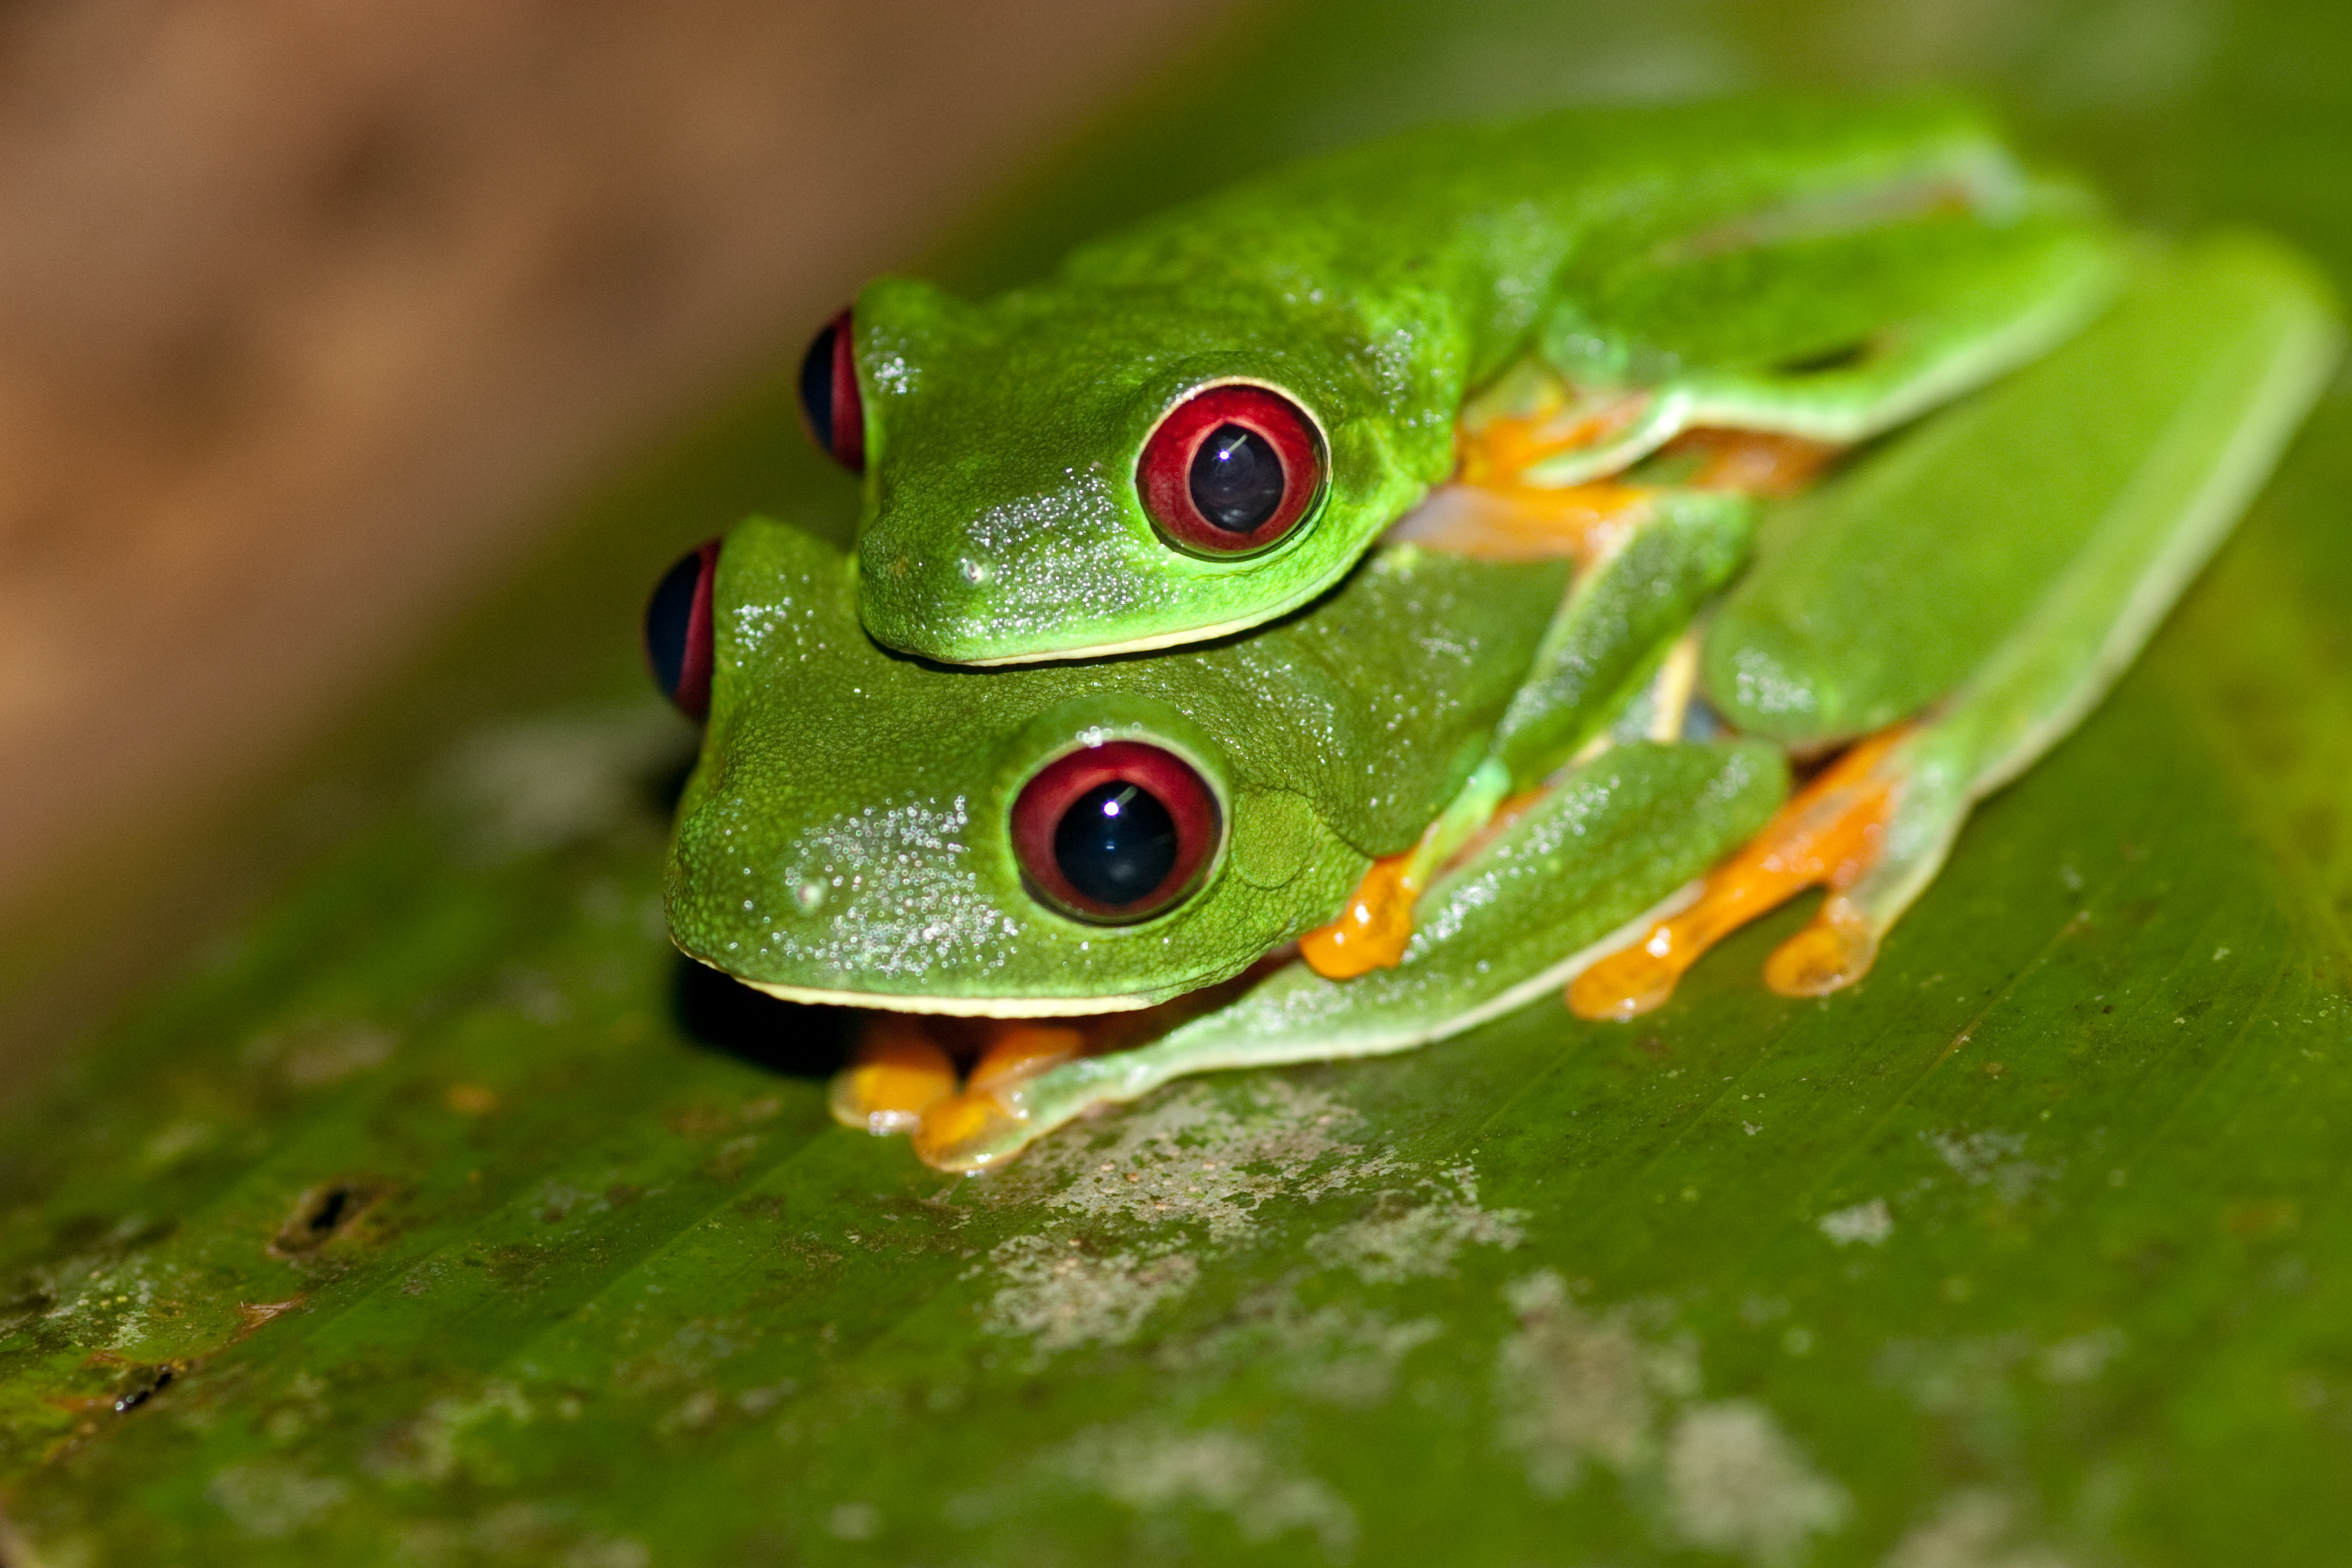 Mesmerizing frog wallpaper, Vibrant red-eyed frog, Decorative background, Frog lover, 3080x2050 HD Desktop